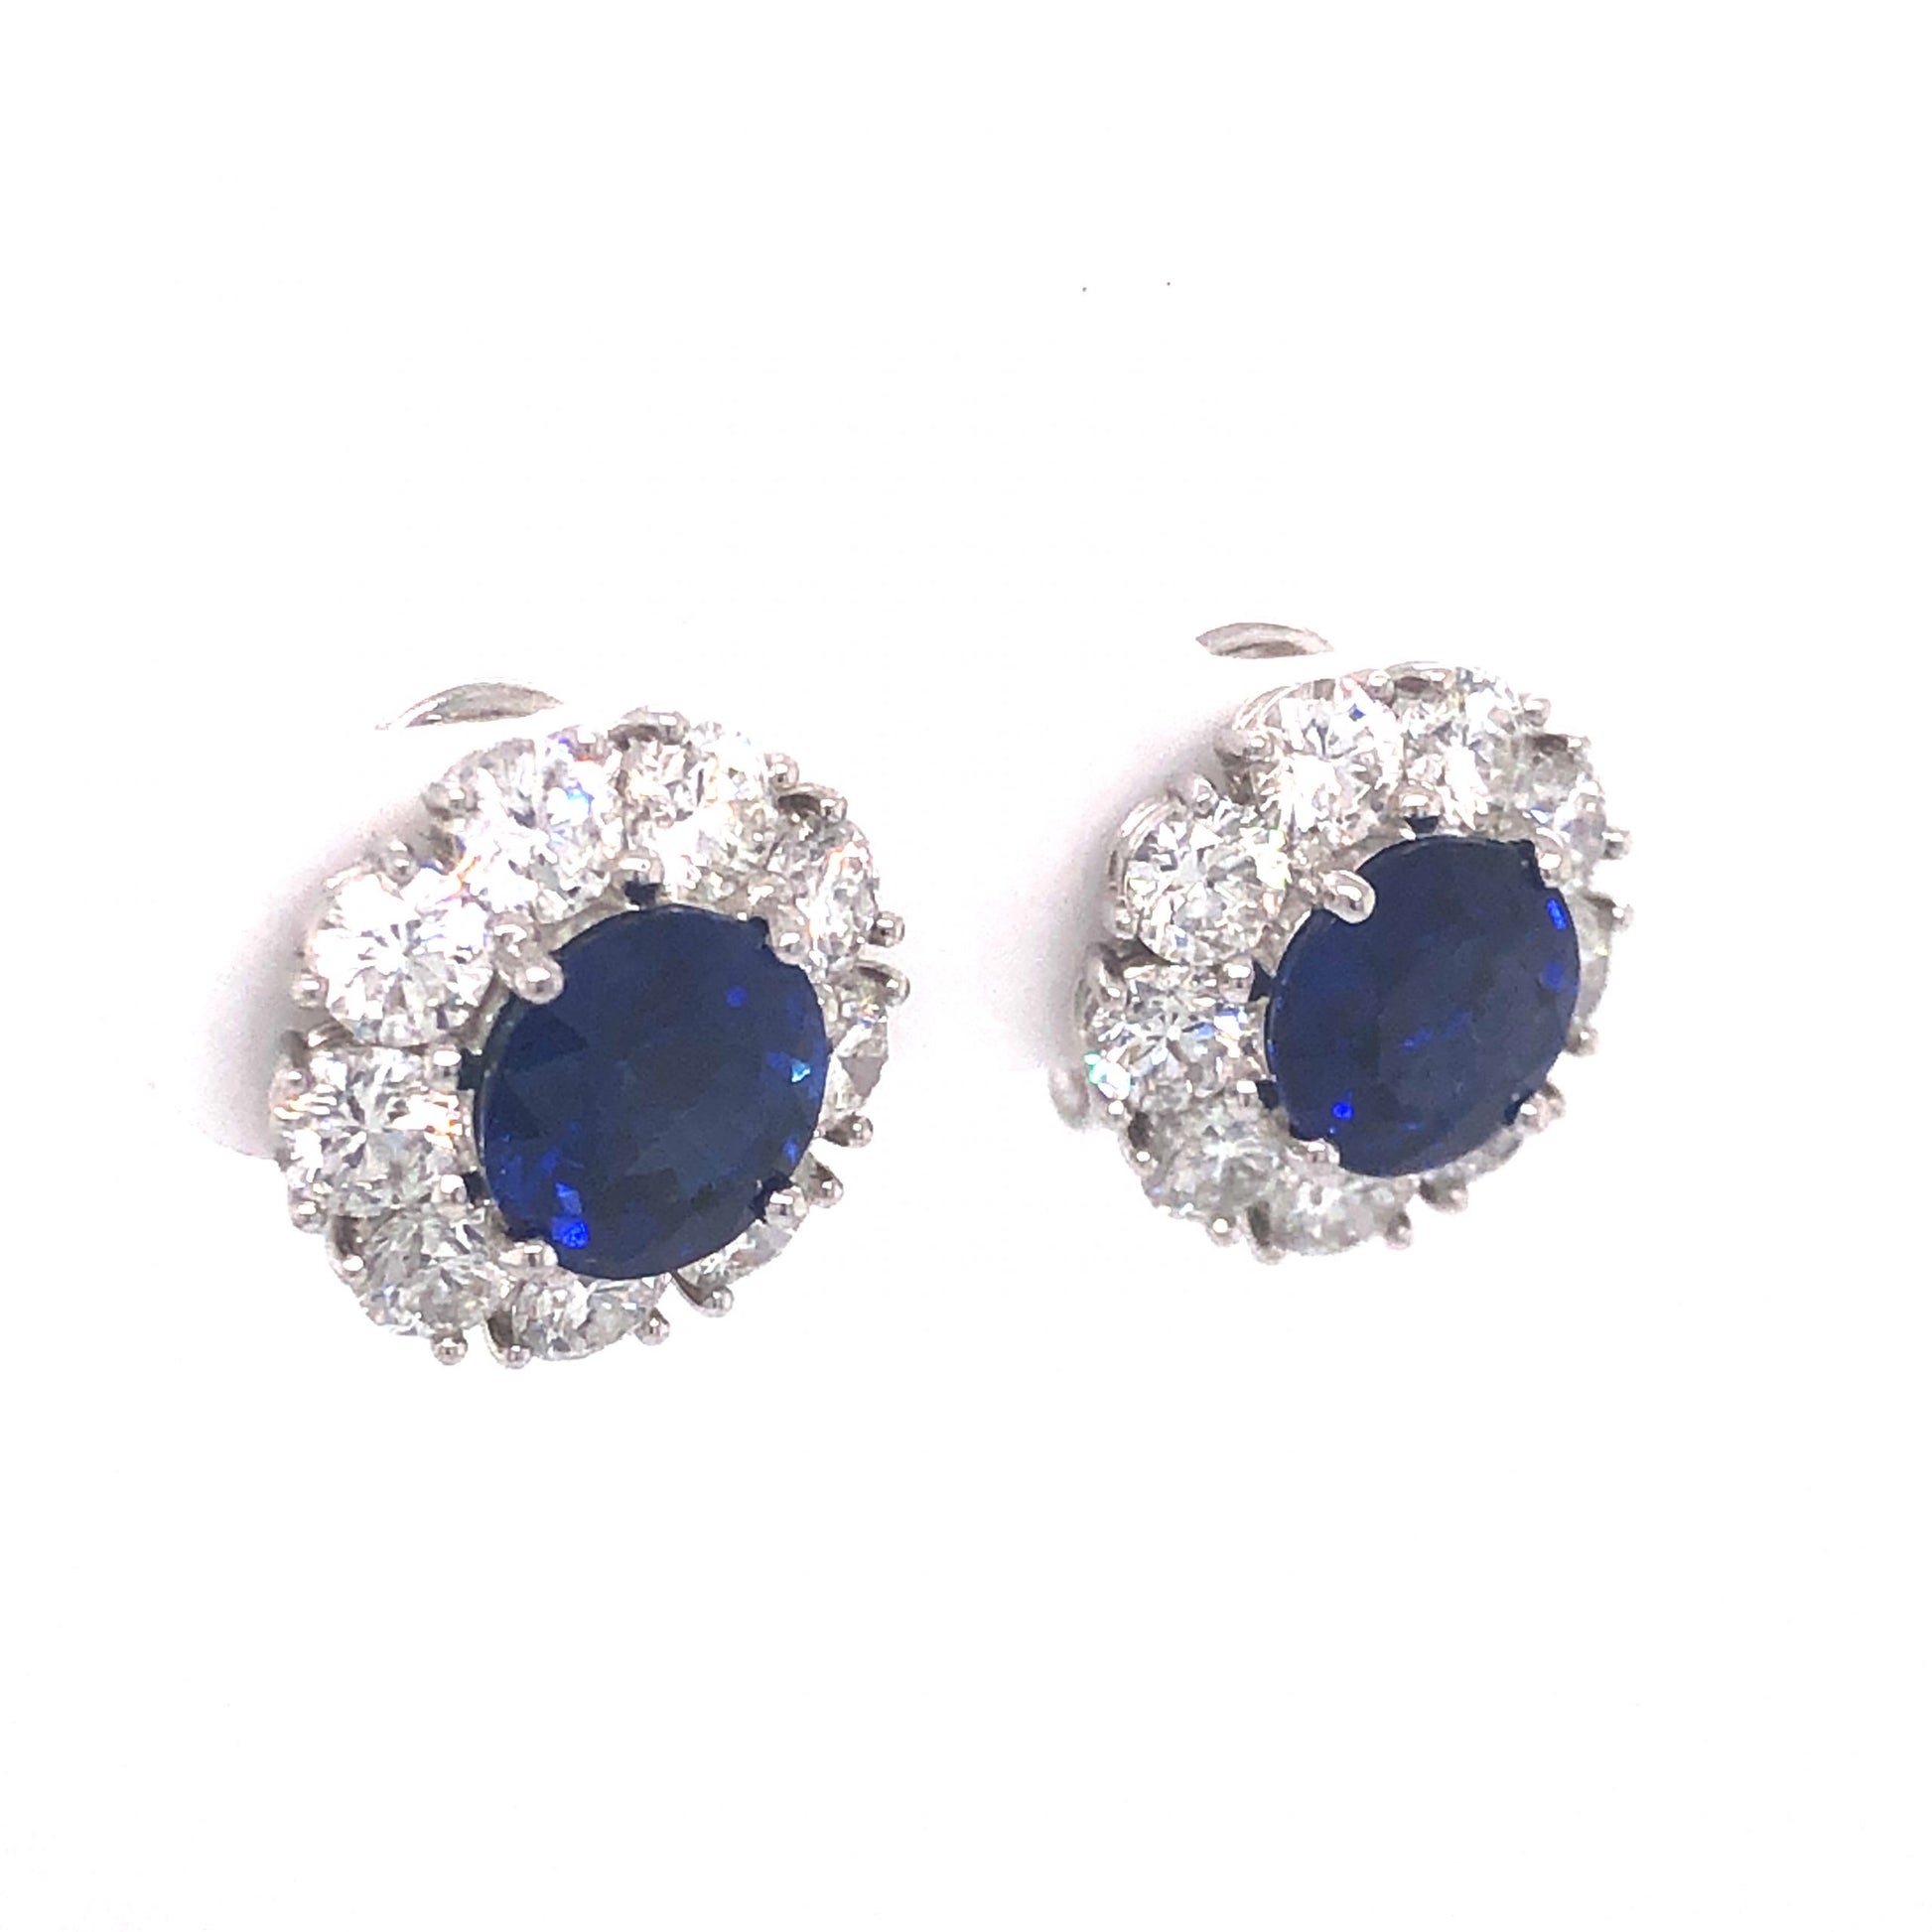 3.82 Round Cut Sapphire & Diamond Earrings in Platinum